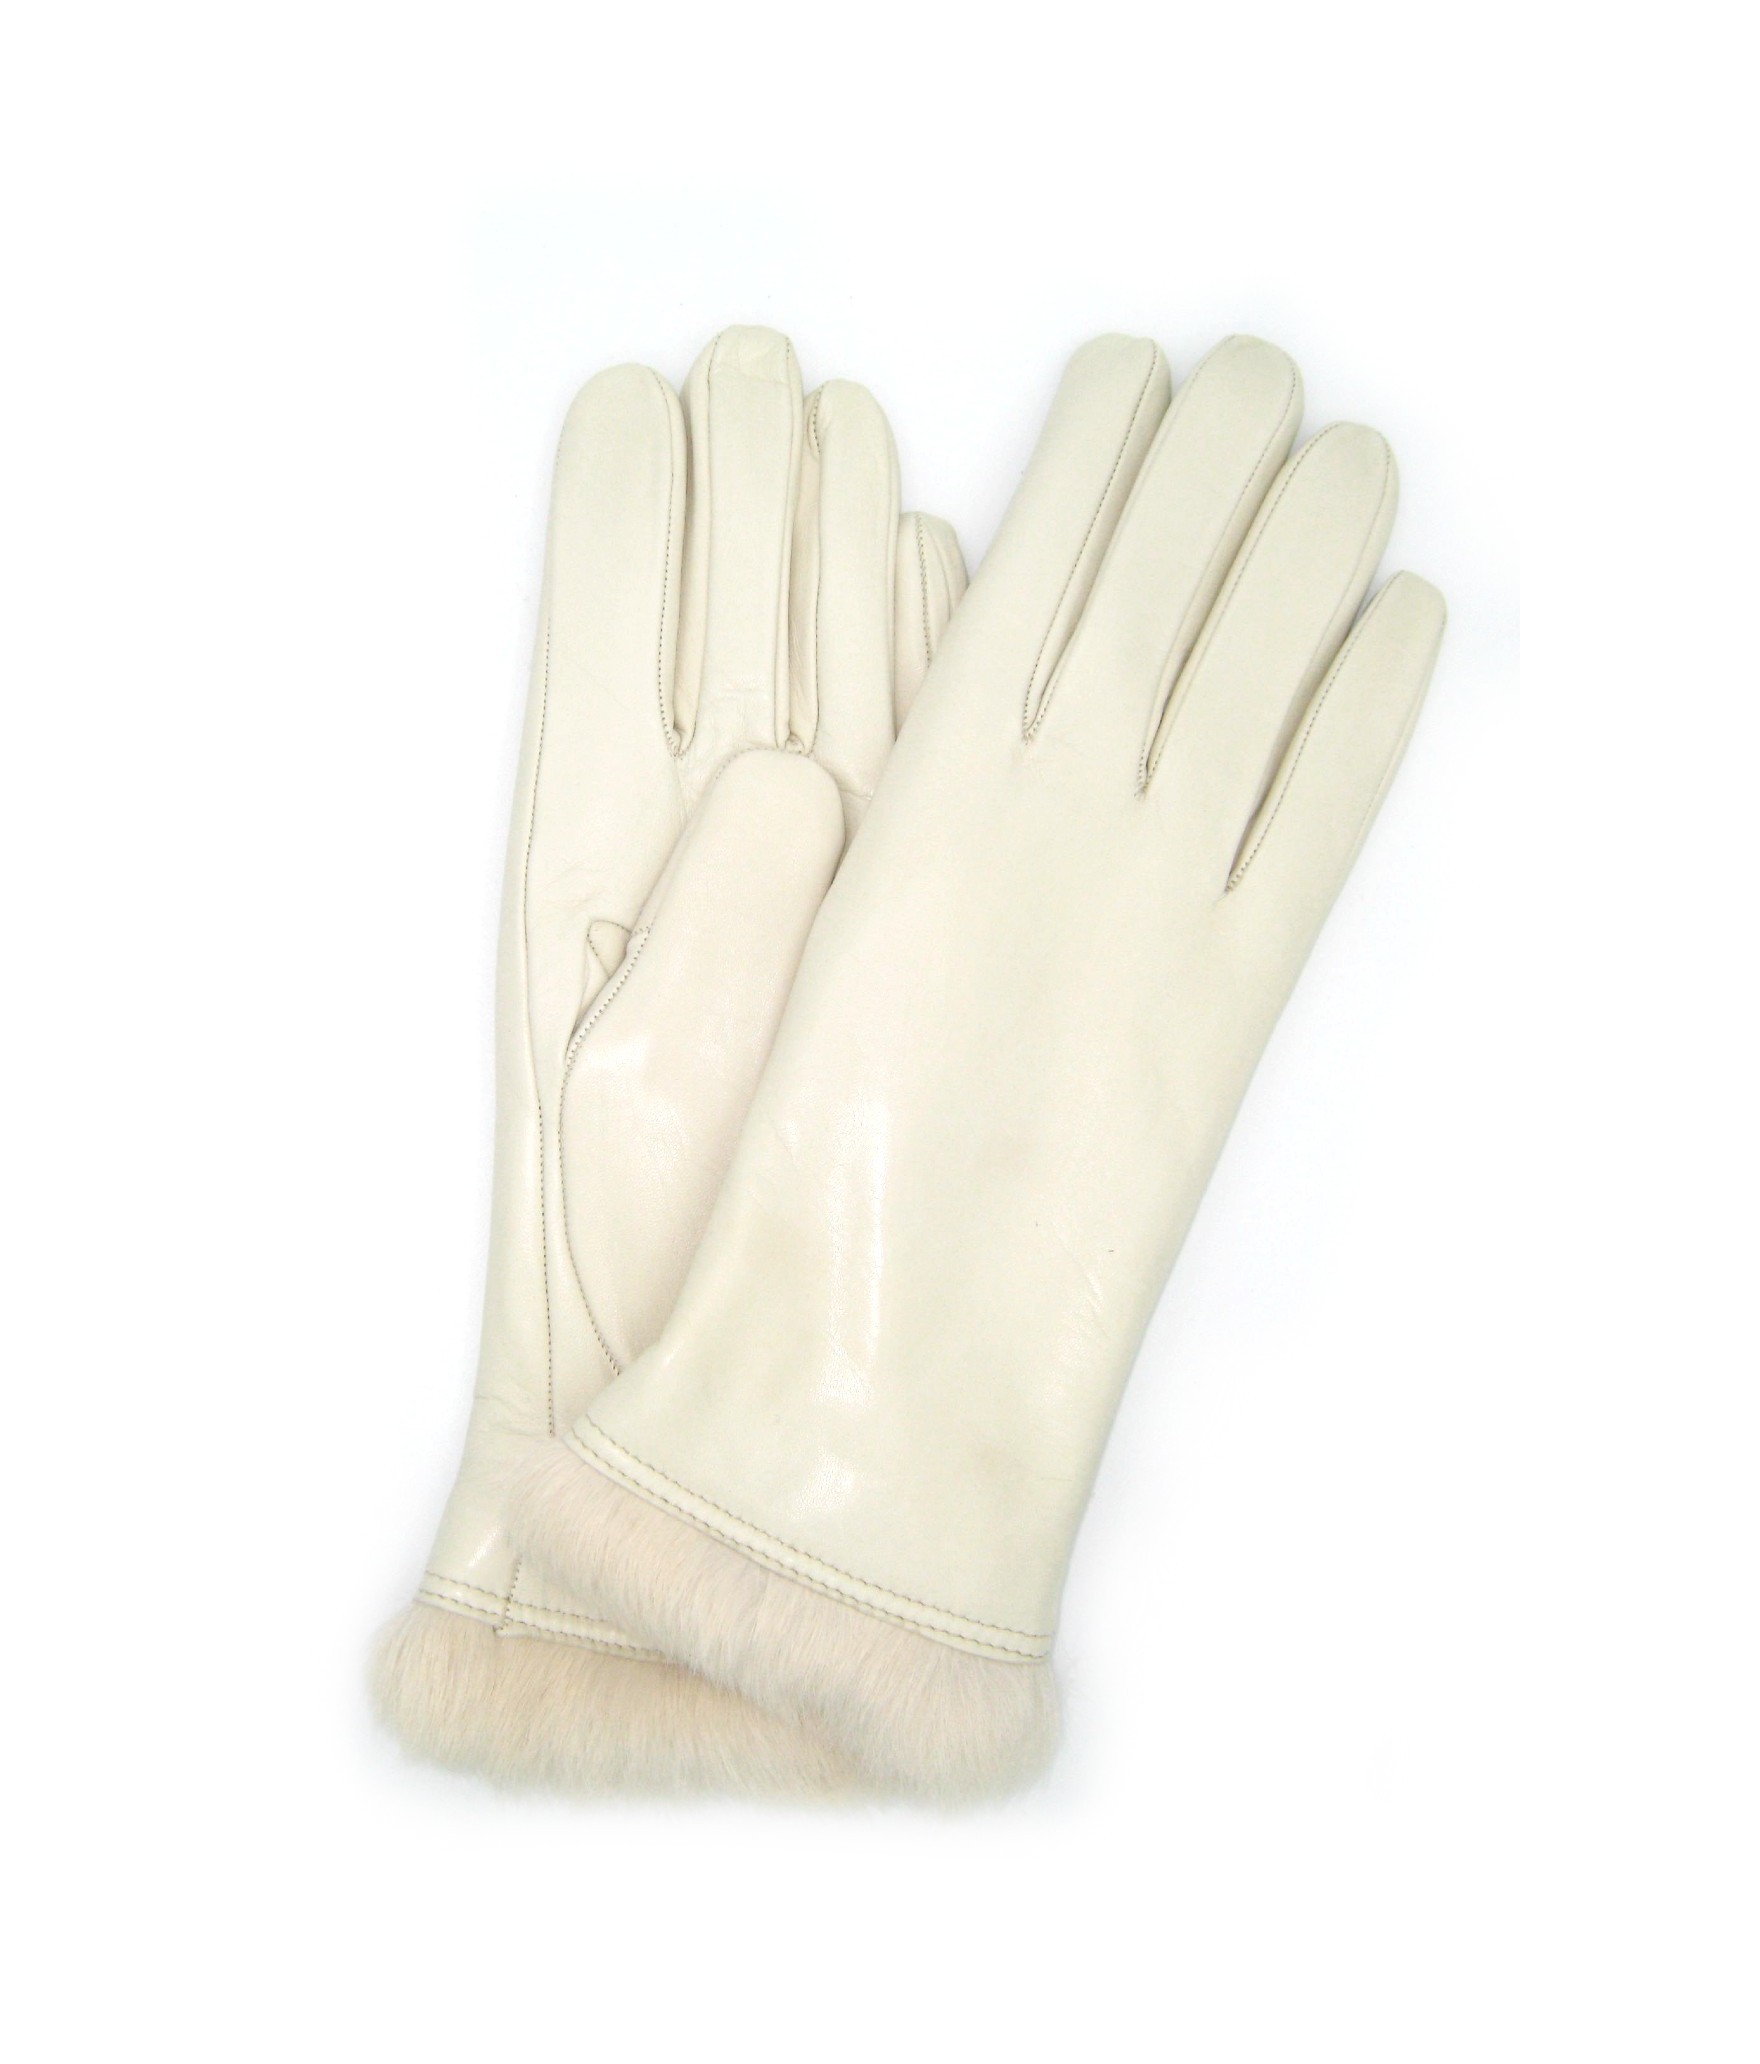 Nappa leather gloves 4bt Rabbir fur lined Cream Sermoneta